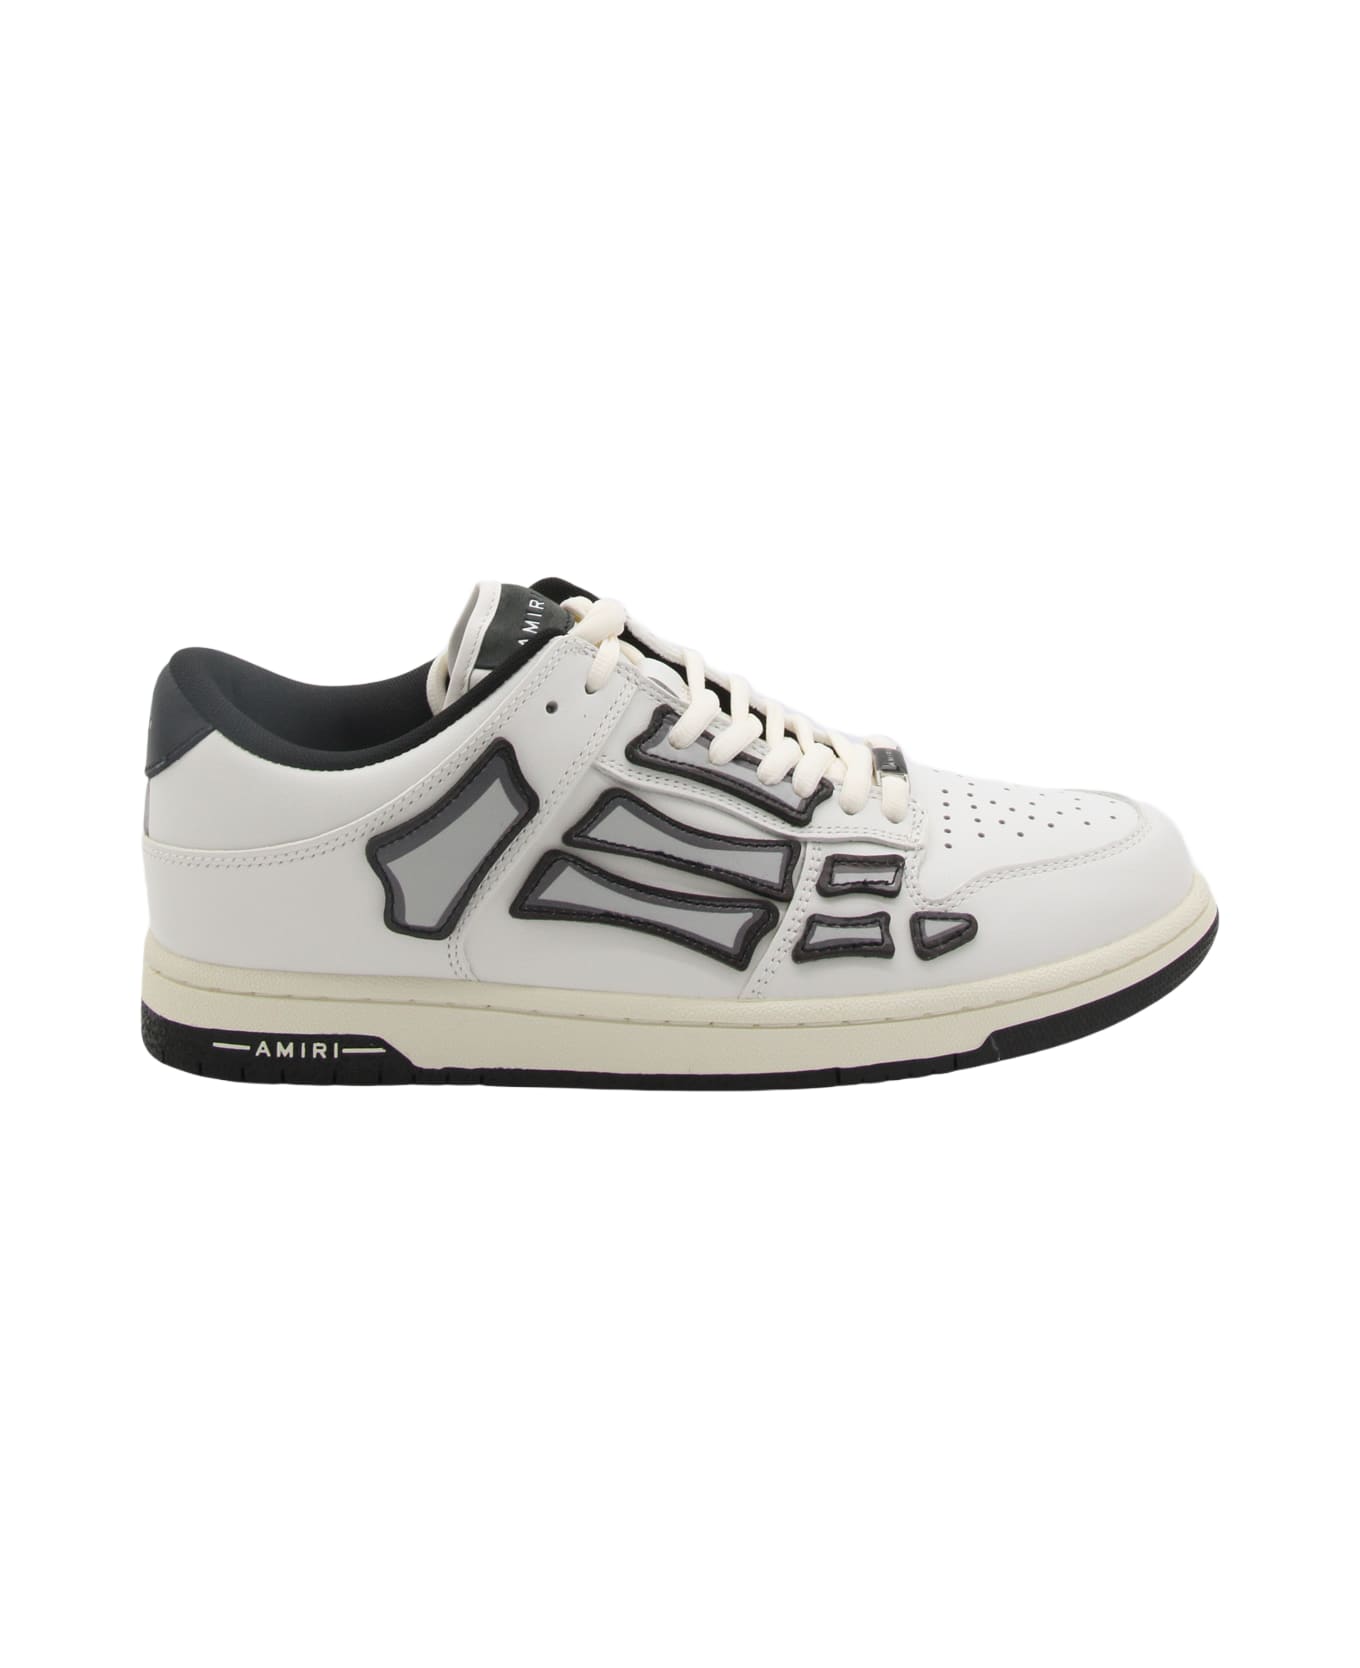 AMIRI White And Black Leather Skel Sneakers - Bianco